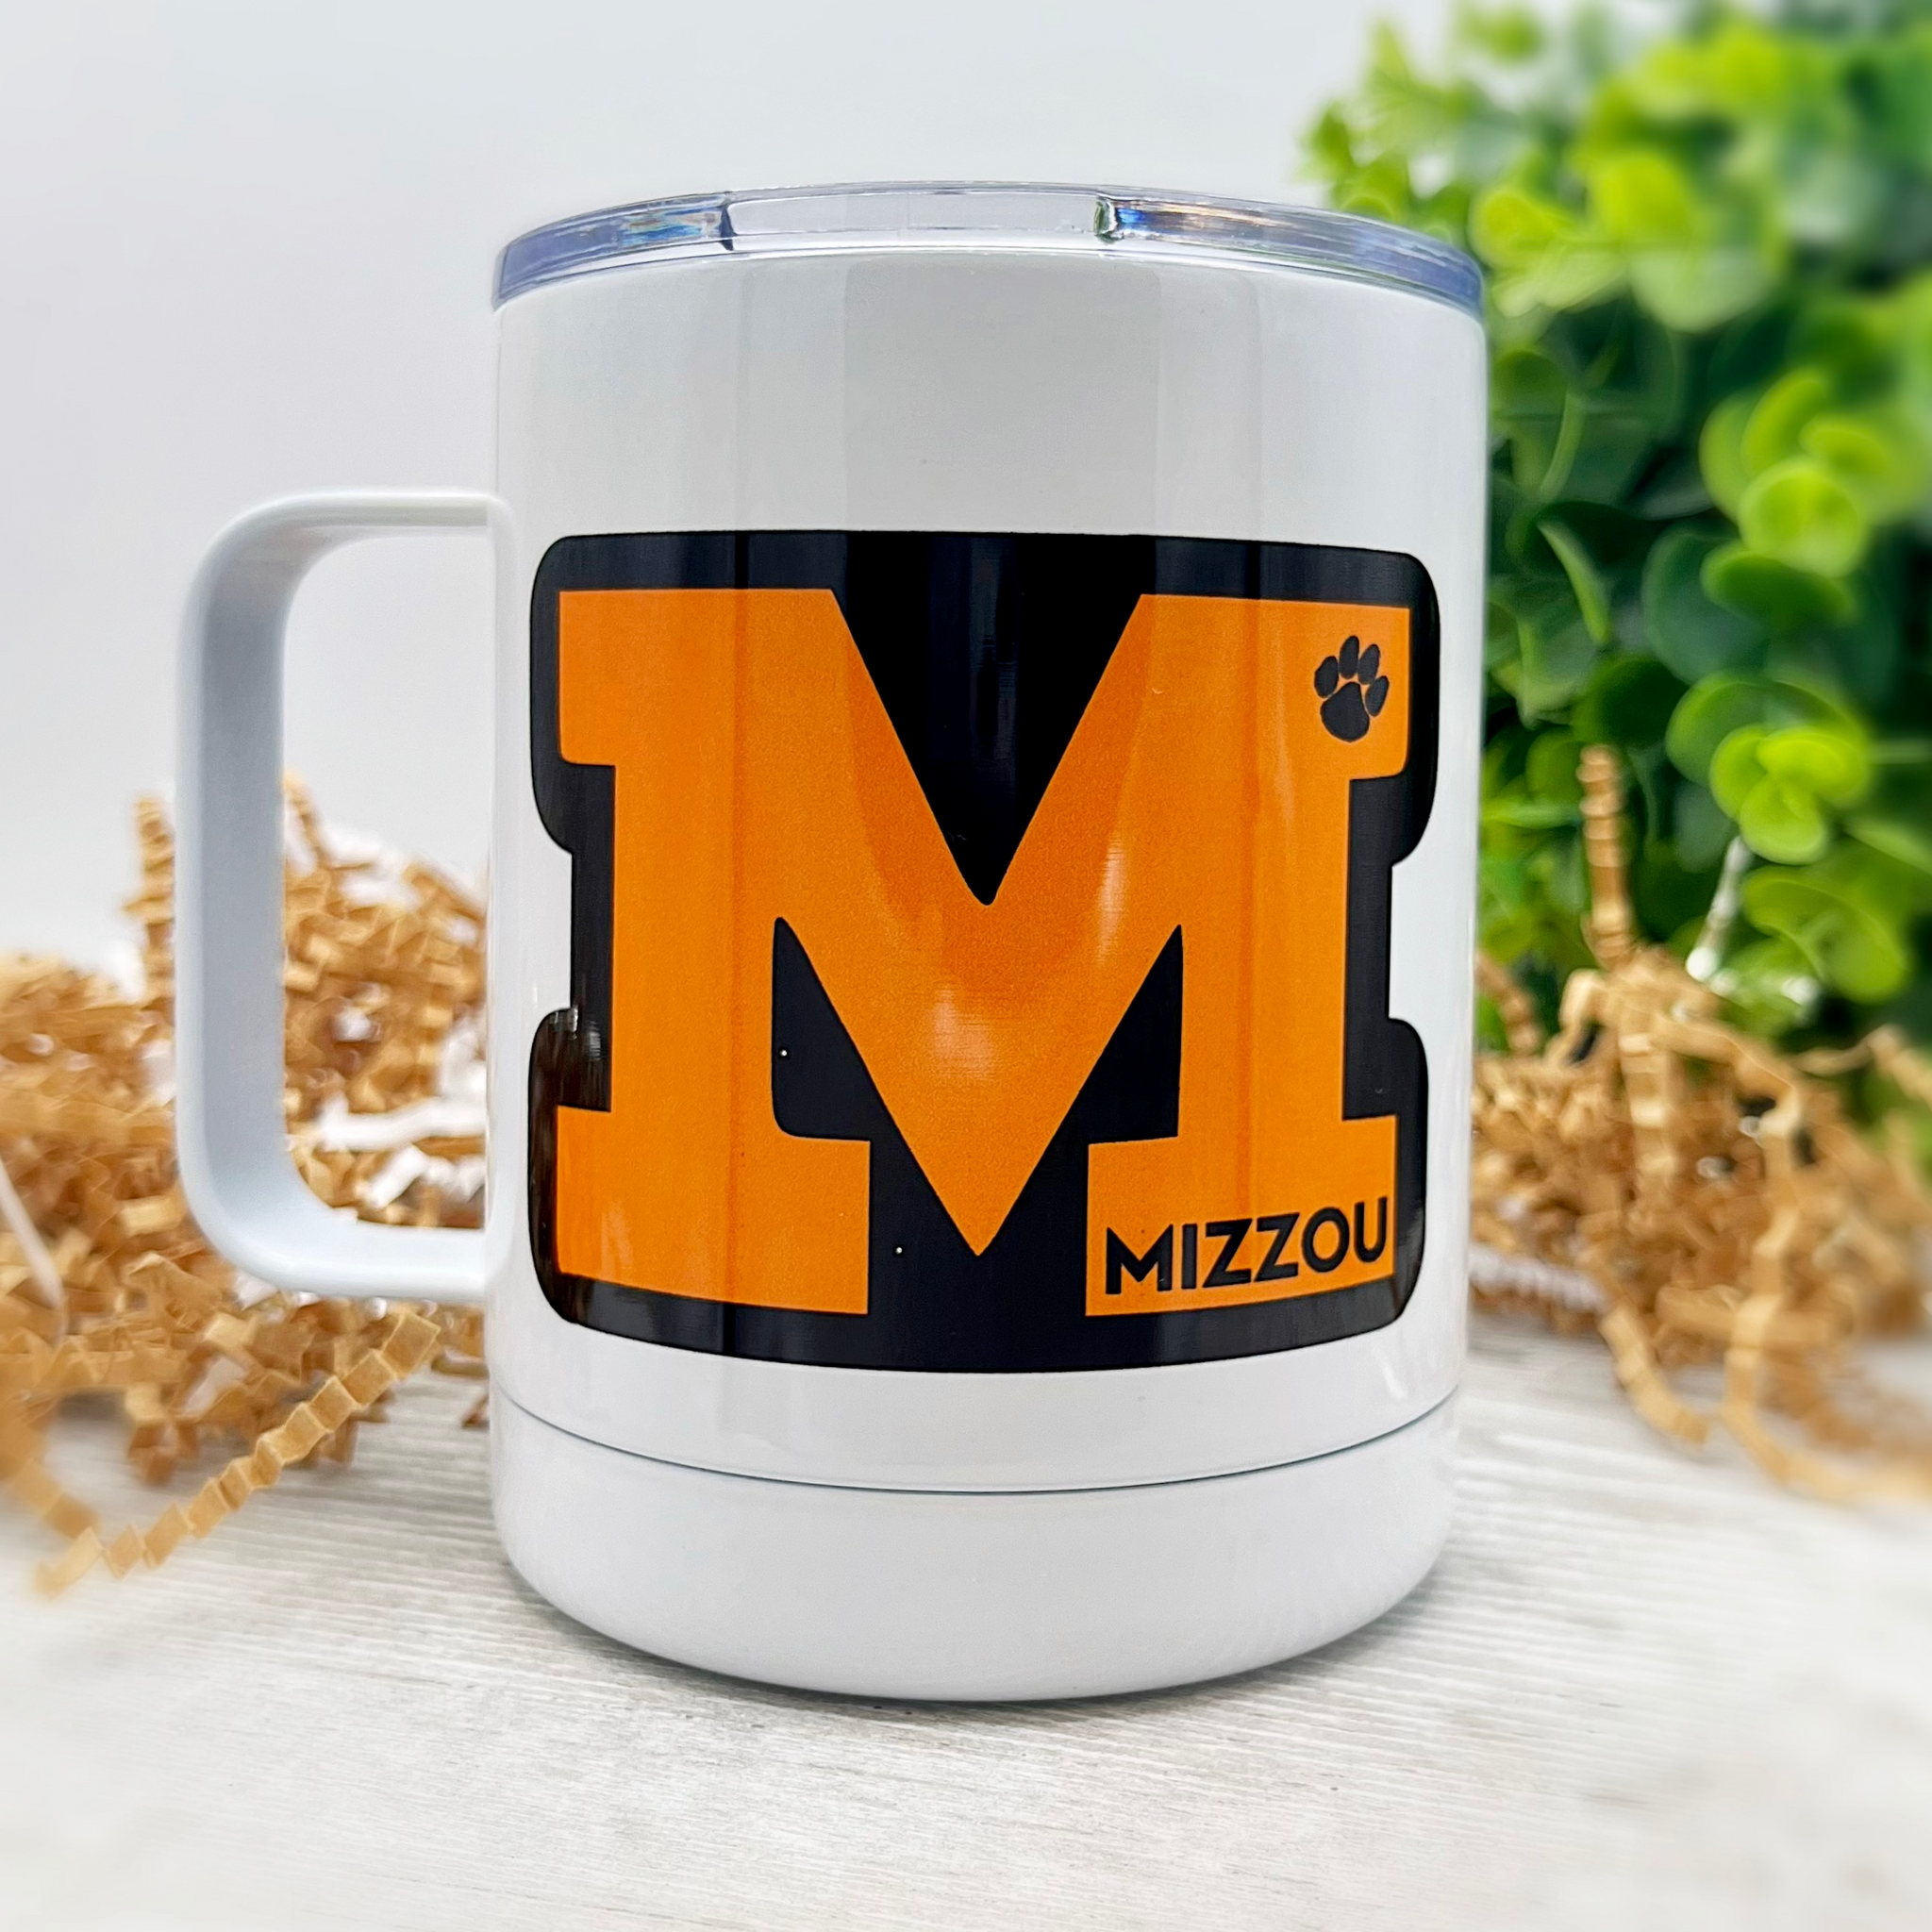 MIZZOU 10 oz. Stainless Steel & Enamel Coffee Mug with Lid